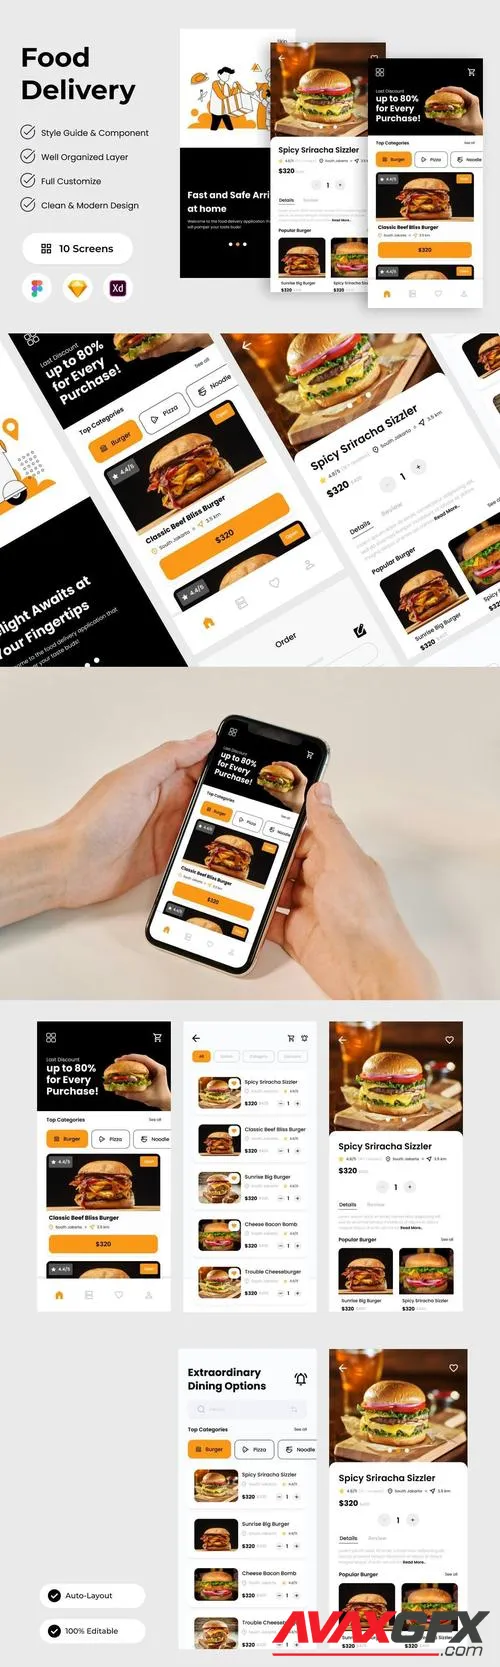 DashDine - Food Delivery Mobile App